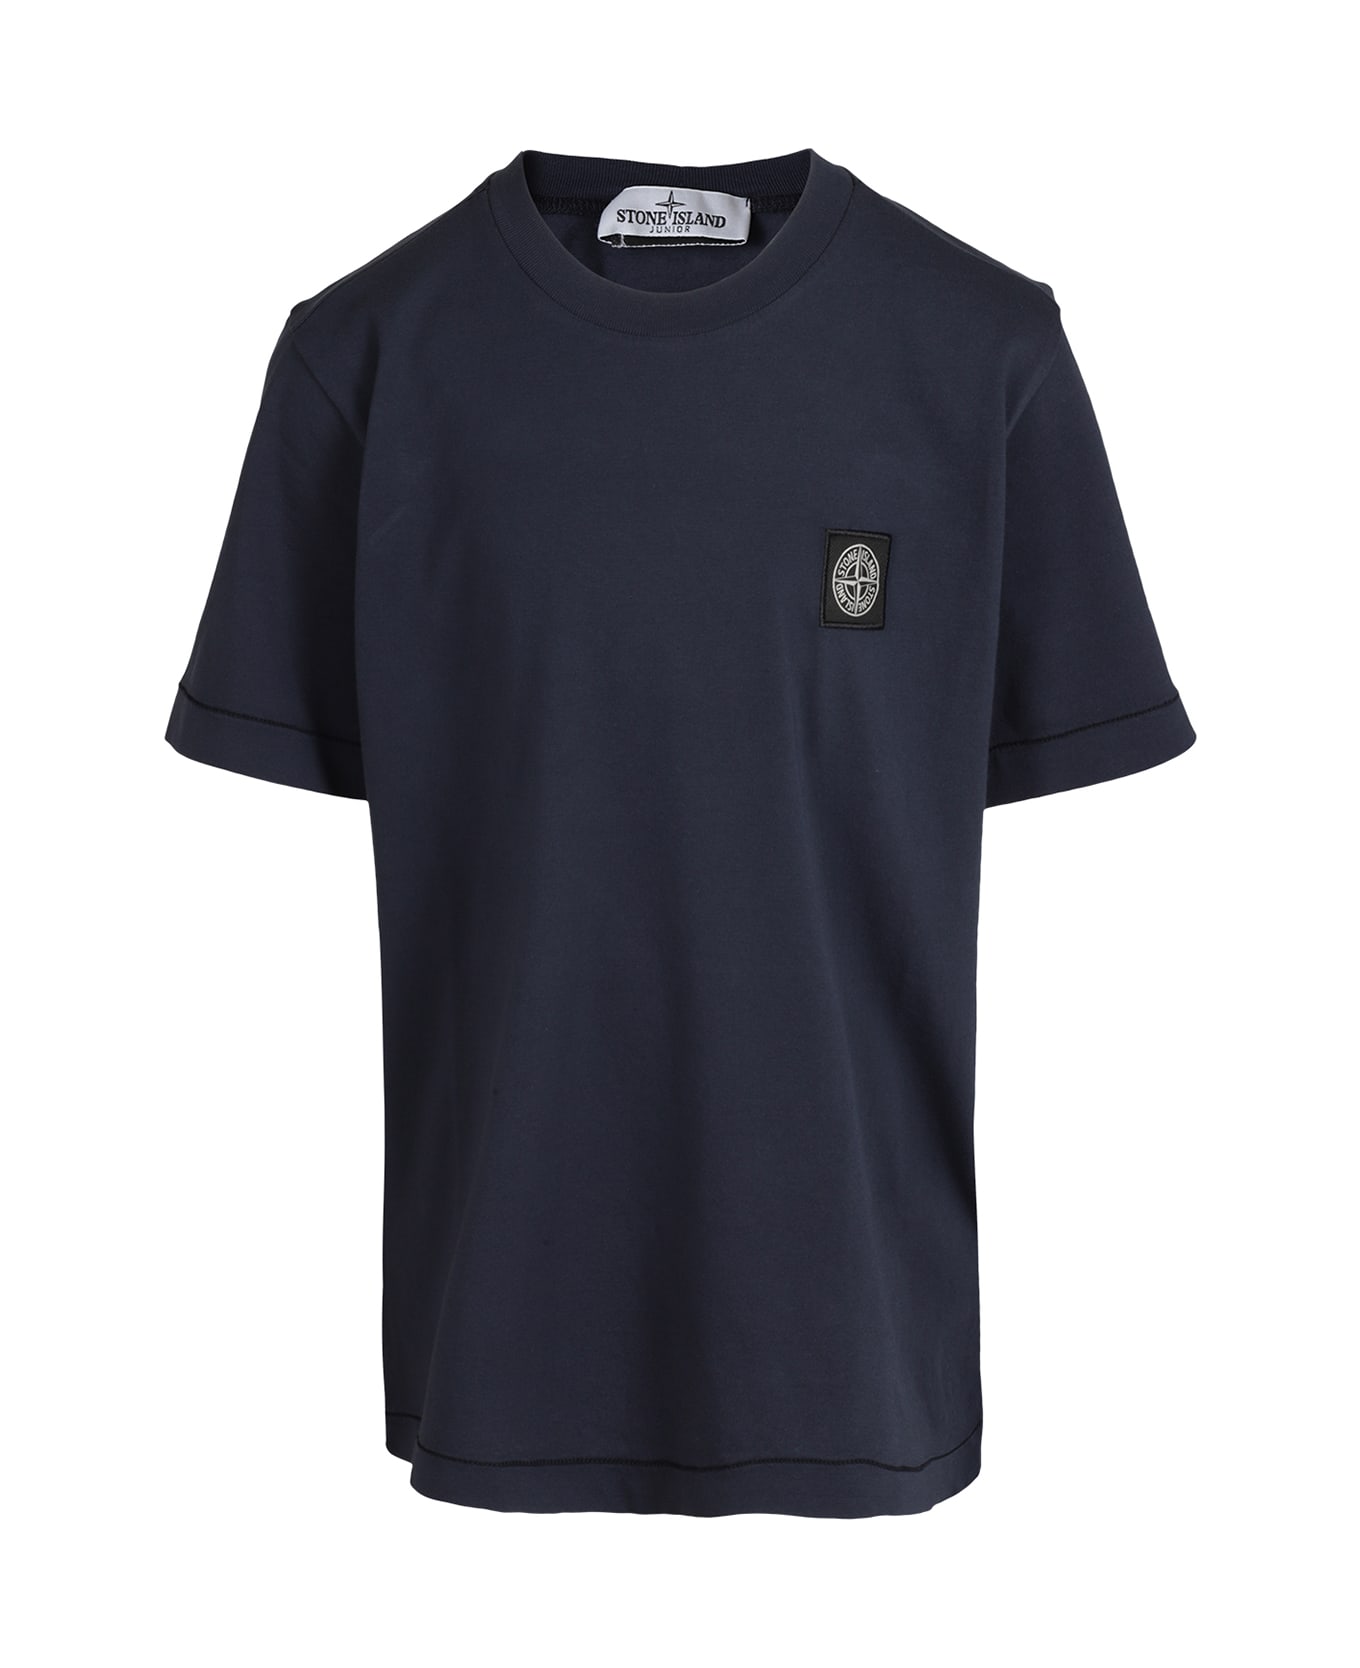 Stone Island Junior T Shirt - Navy Blue